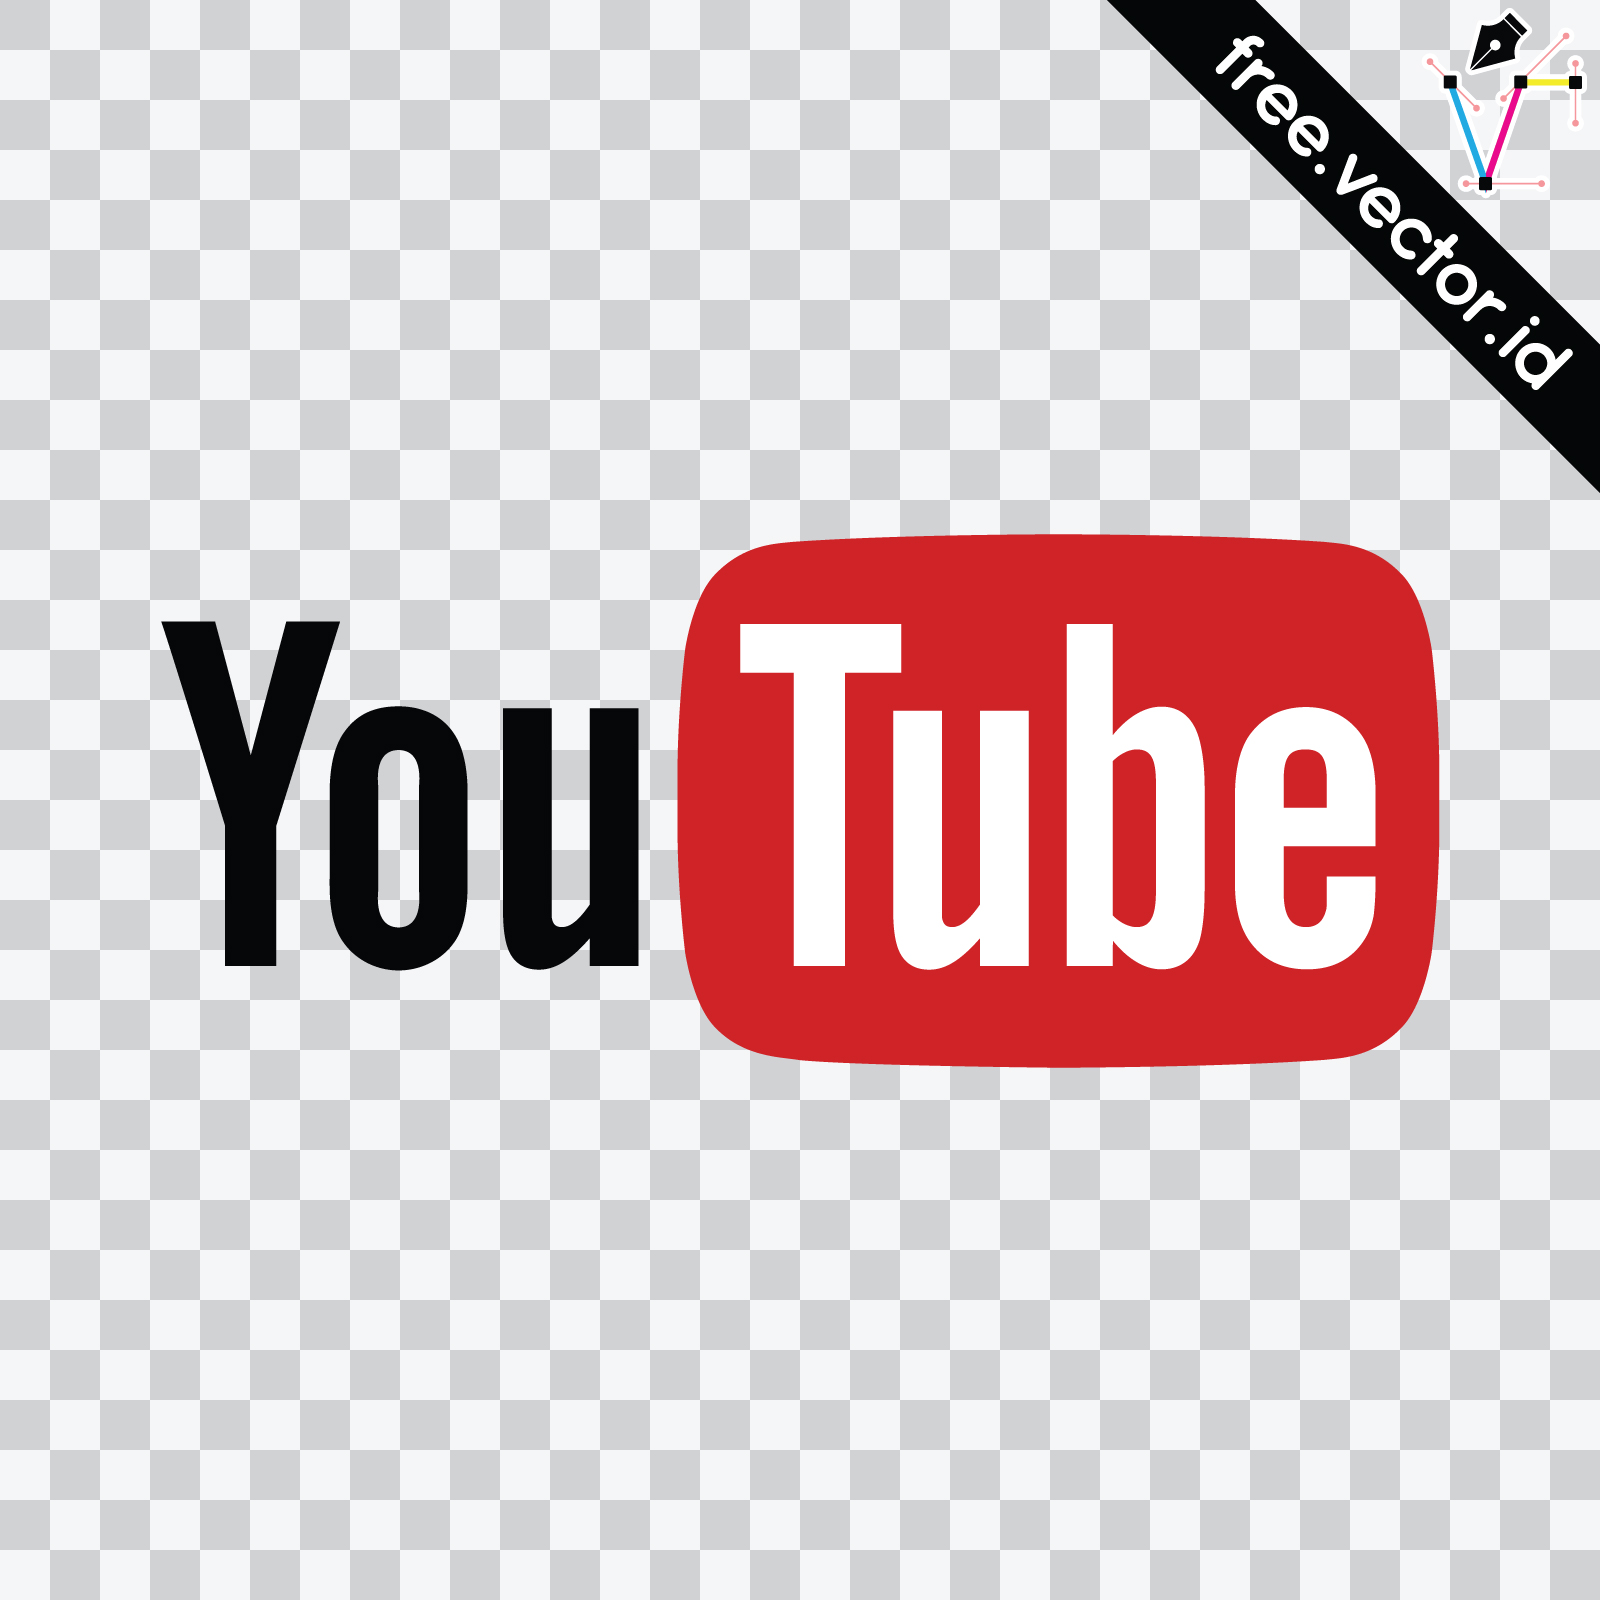 Youtube Logo Vector Free Download - Youtube Logo Vector Free Download ...